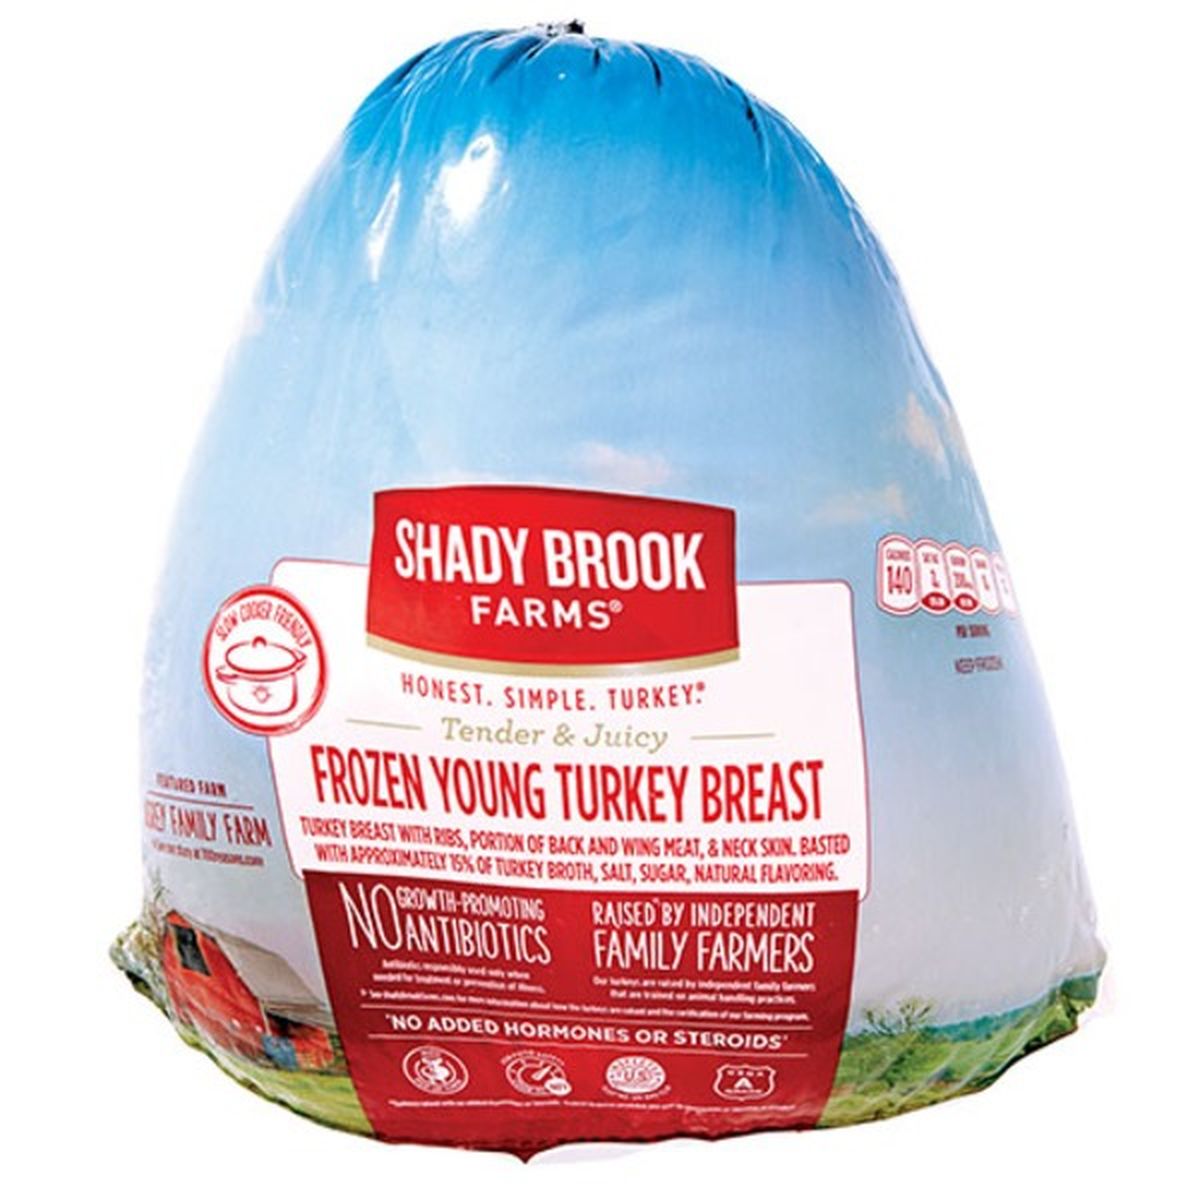 Calories in Shady Brook Farm Frozen Turkey Breast